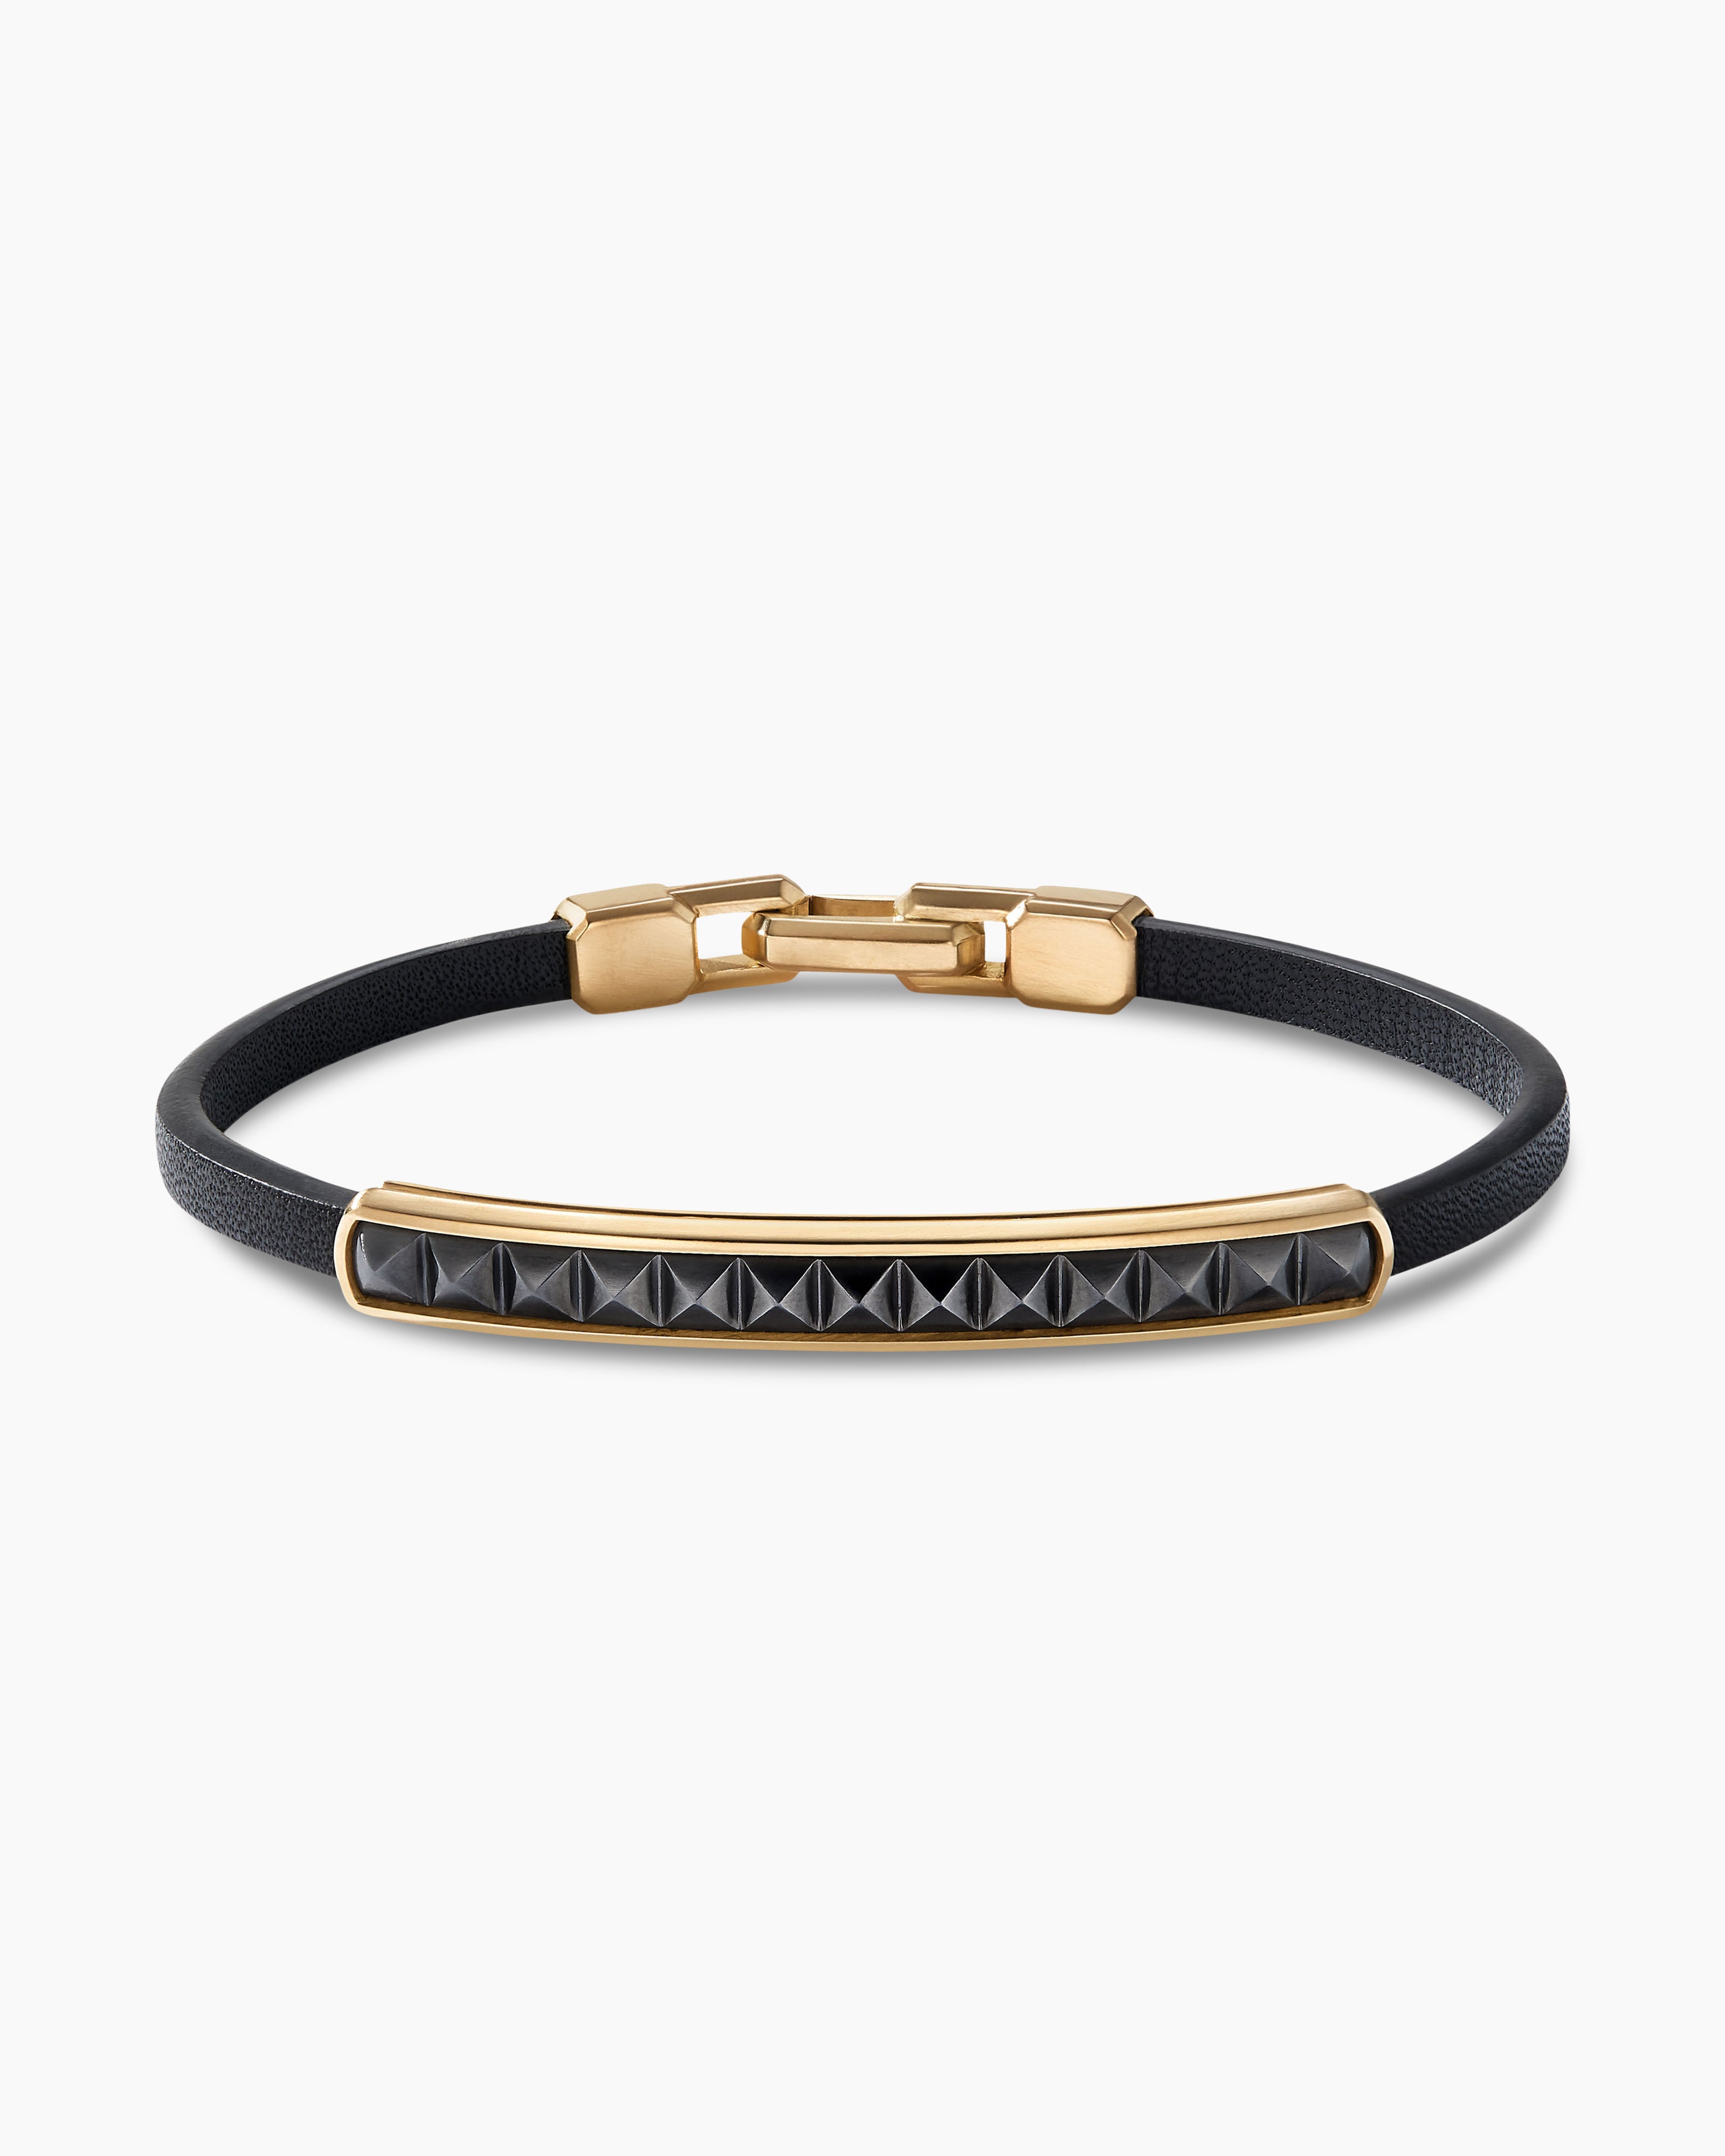 John Hardy Men's Bamboo Black Leather Bracelet | Fink's